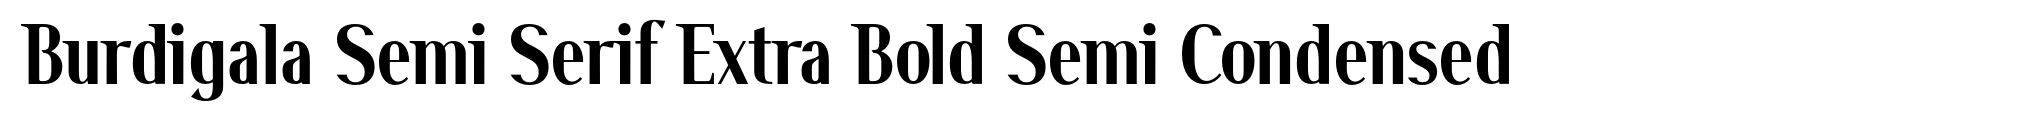 Burdigala Semi Serif Extra Bold Semi Condensed image